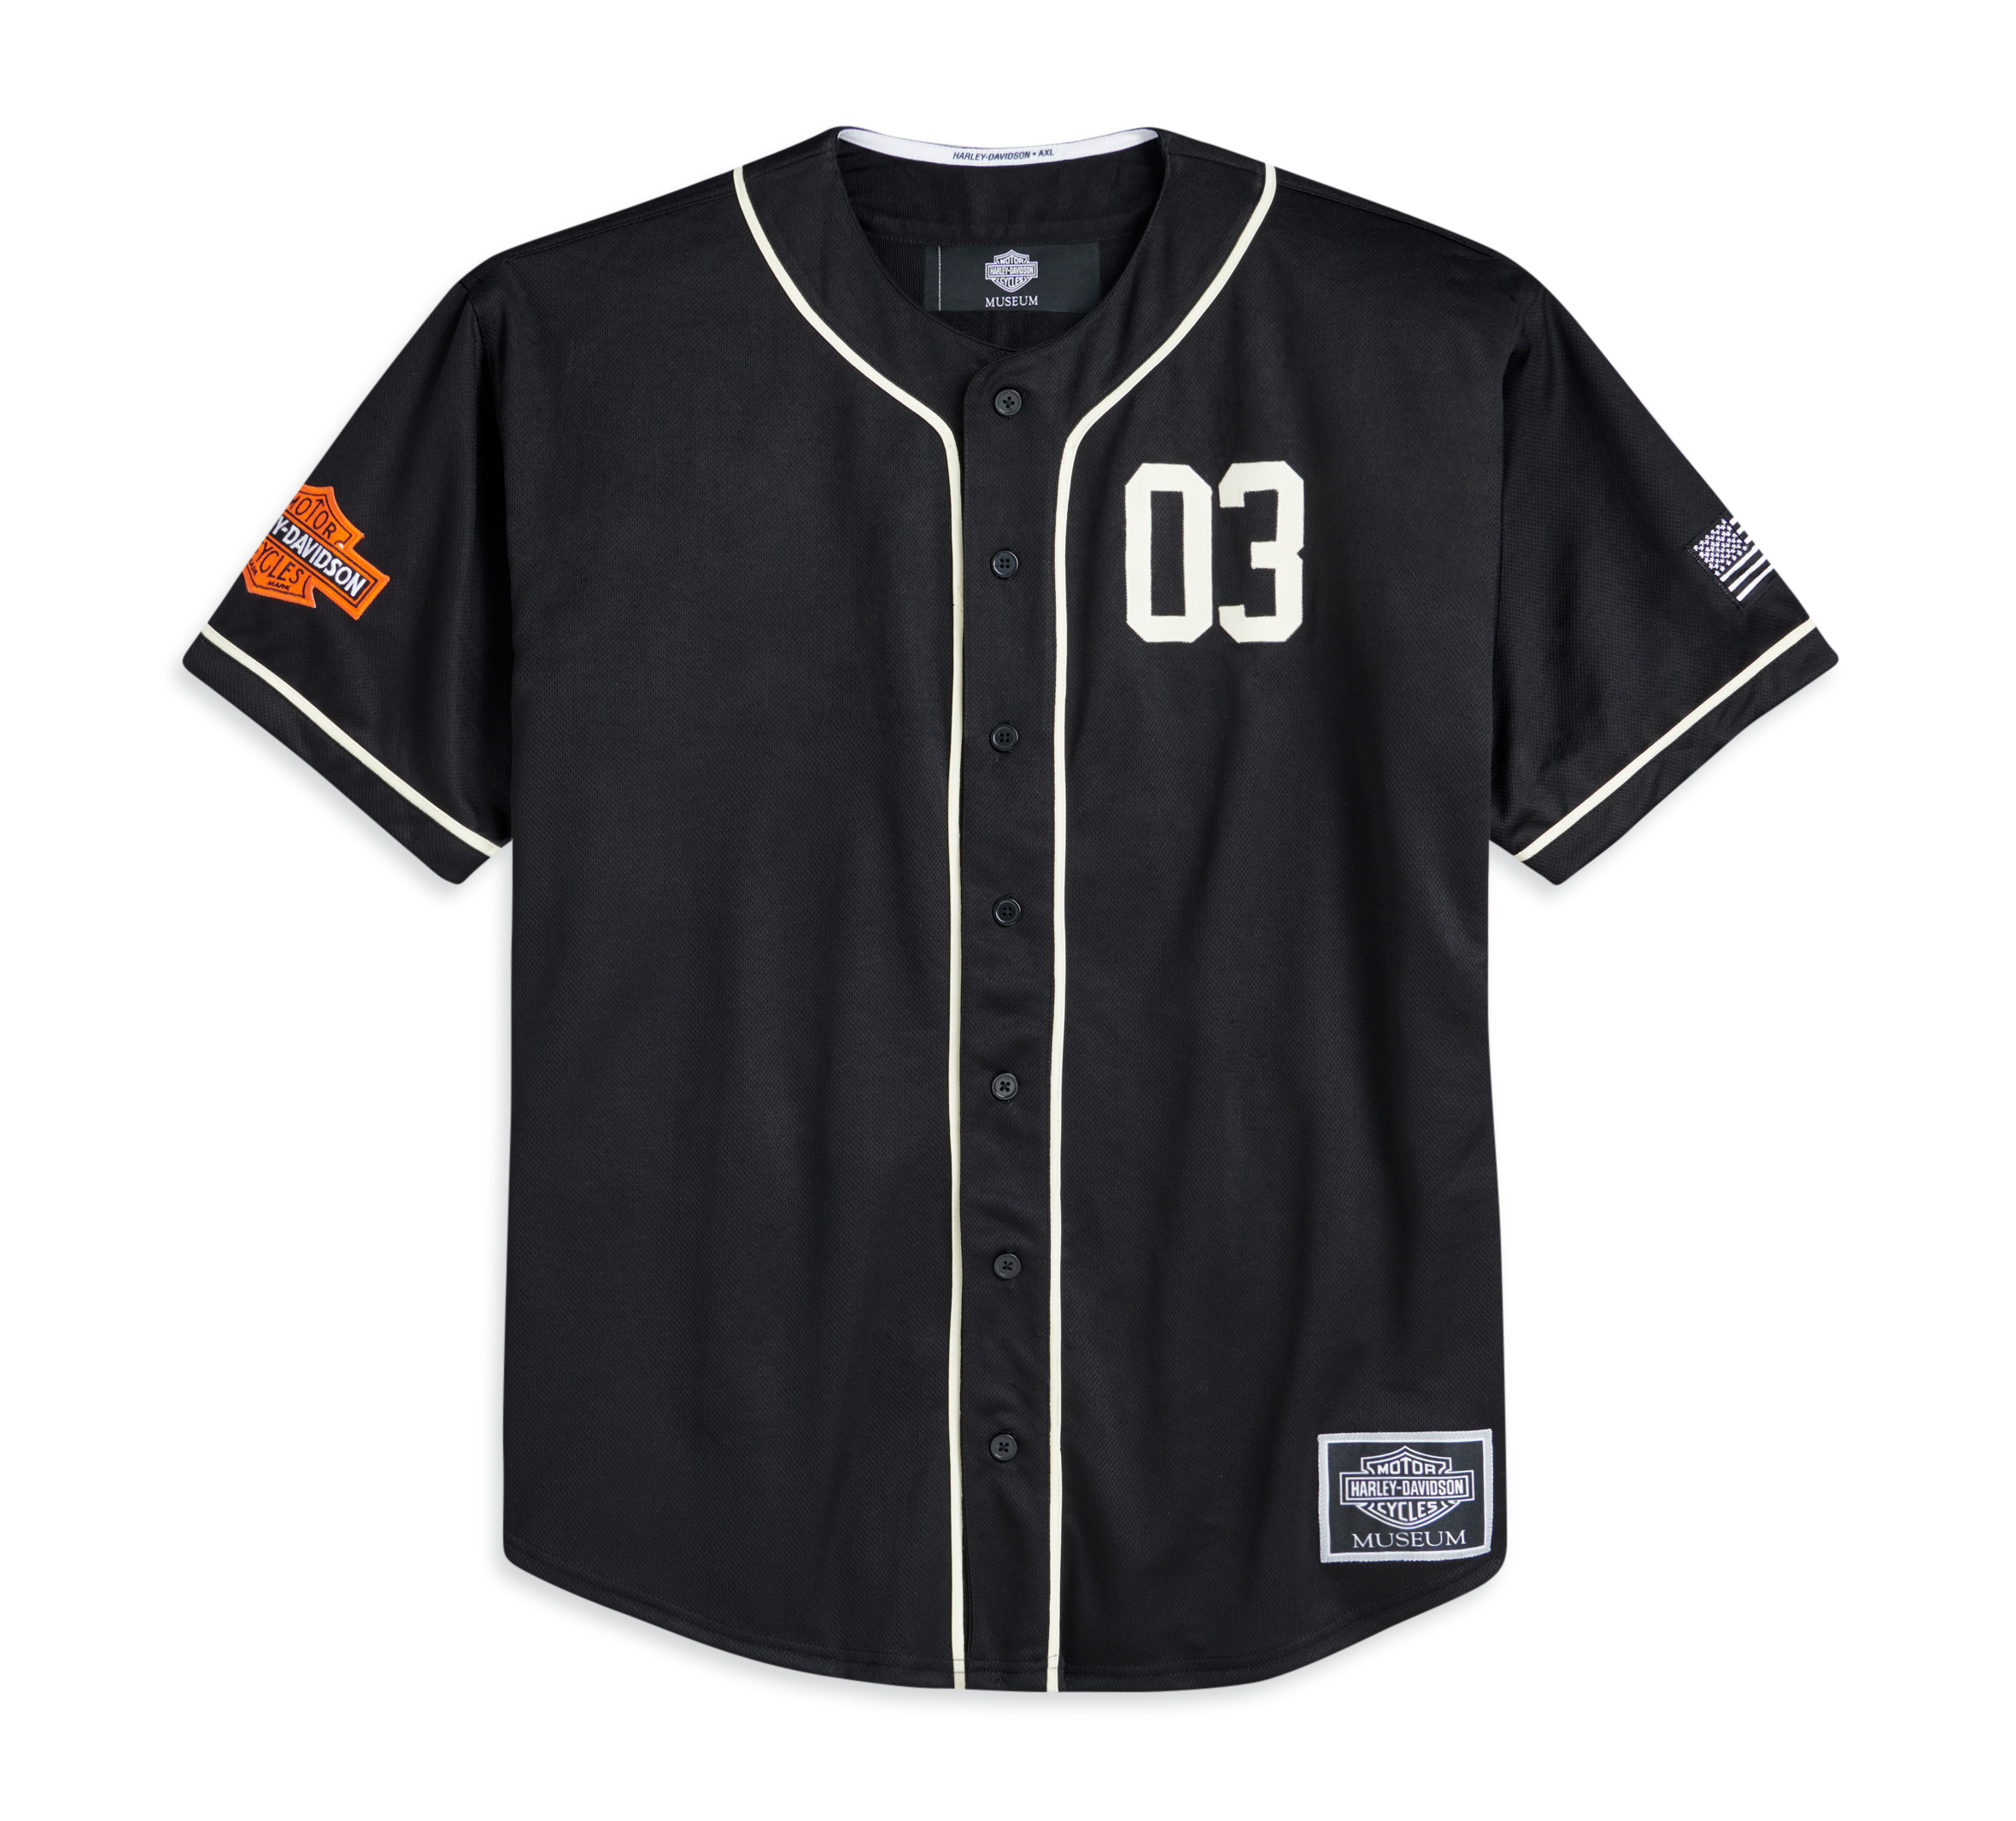 Harley-Davidson Men's Museum Baseball Jersey Shirt, Black - XL